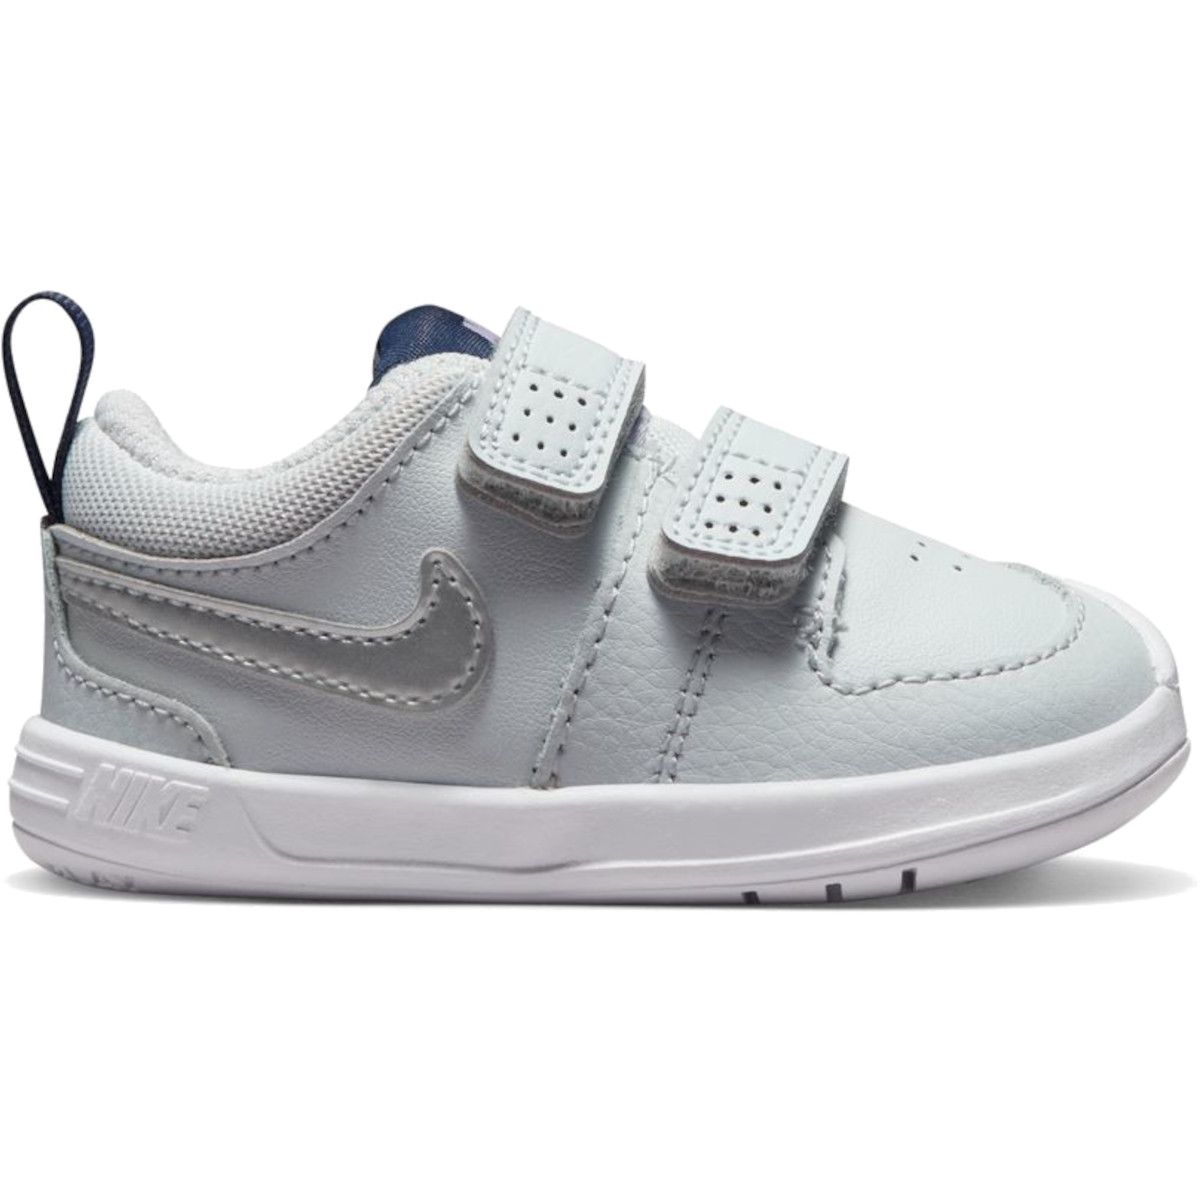 Nike Pico 5 Infant / Toddler Shoes AR4162-009